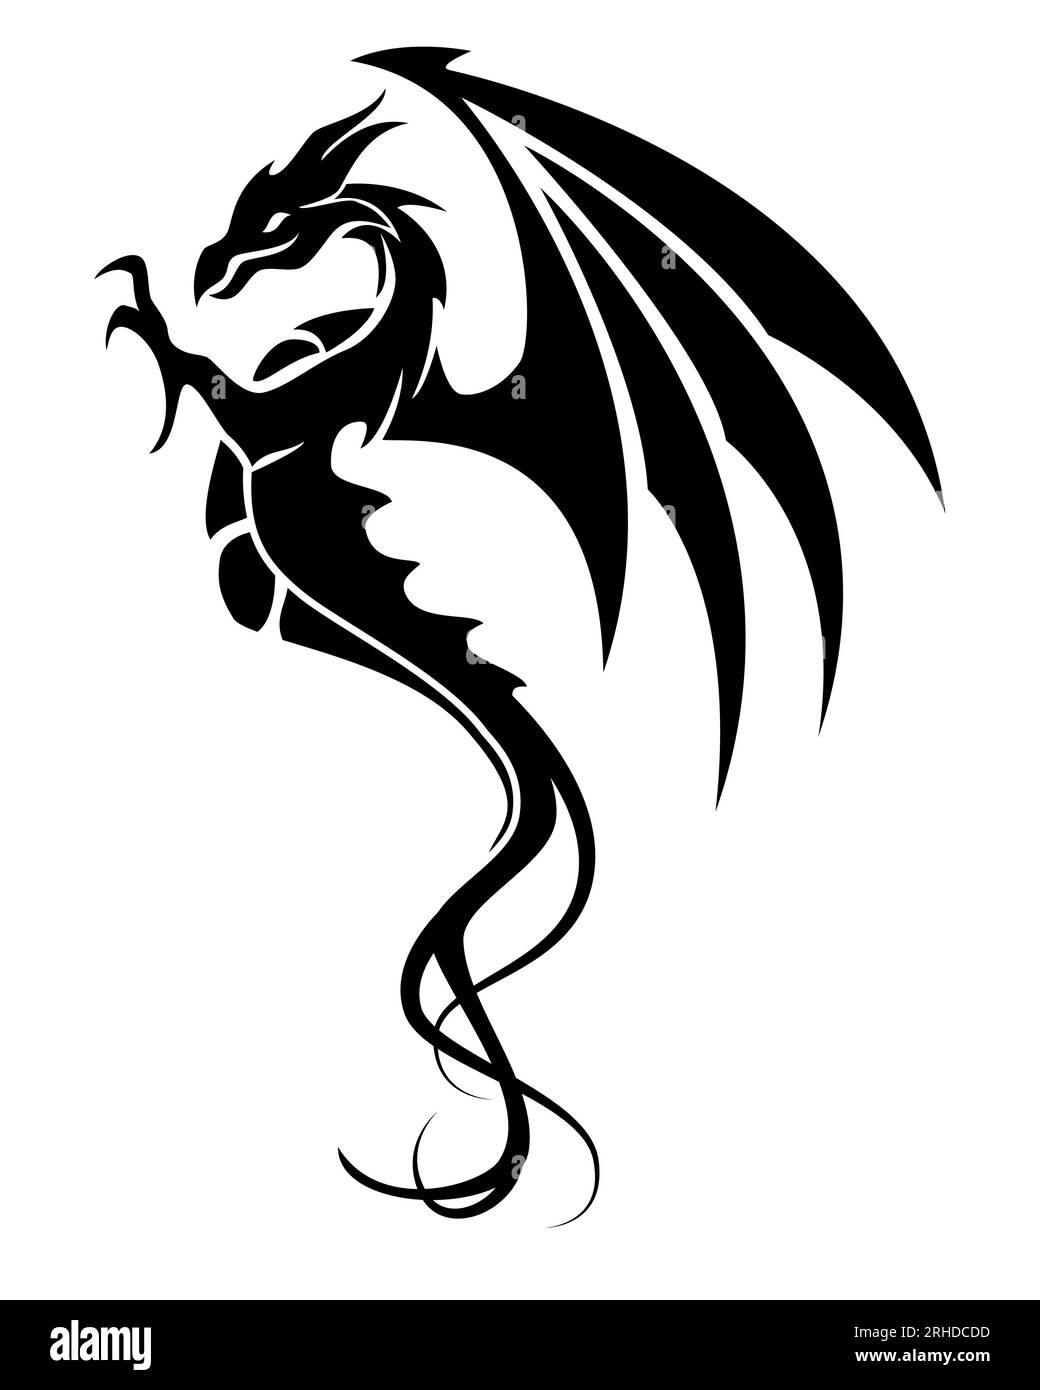 Dragon symbol tattoo, black and white vector illustration Stock Vector ...